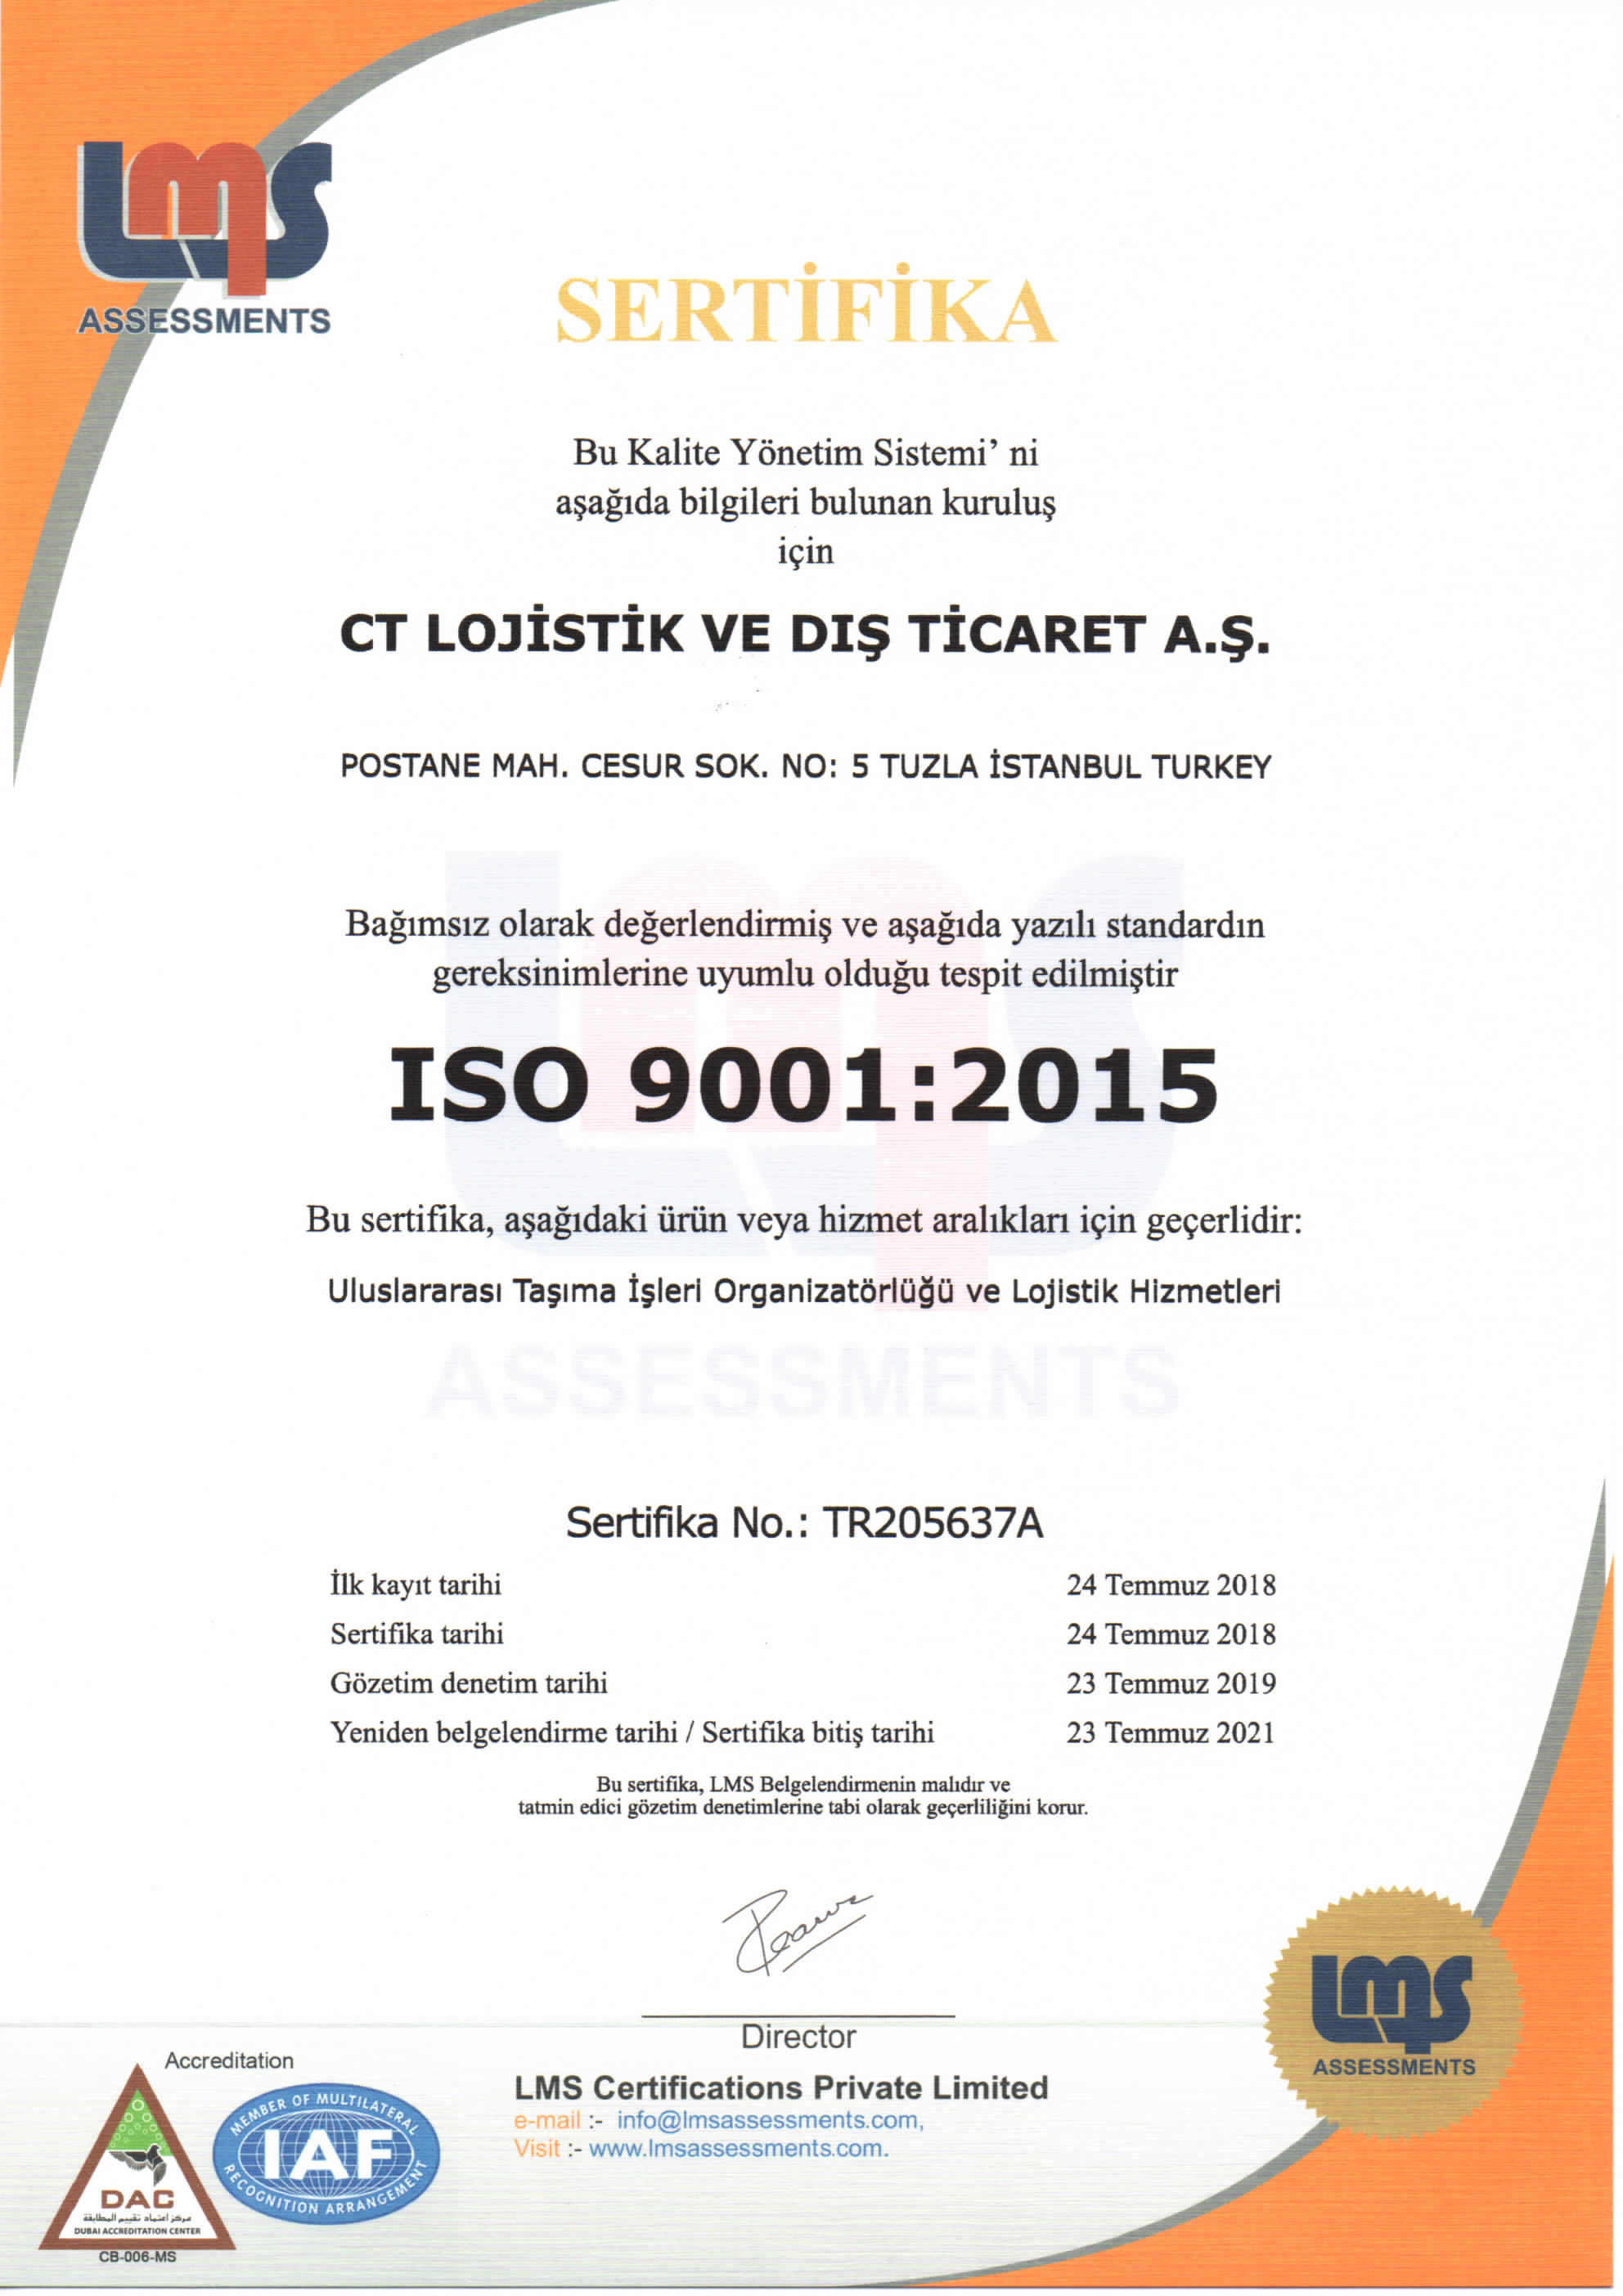 CT Lojistik ve Dış Ticaret A.Ş ISO 9001